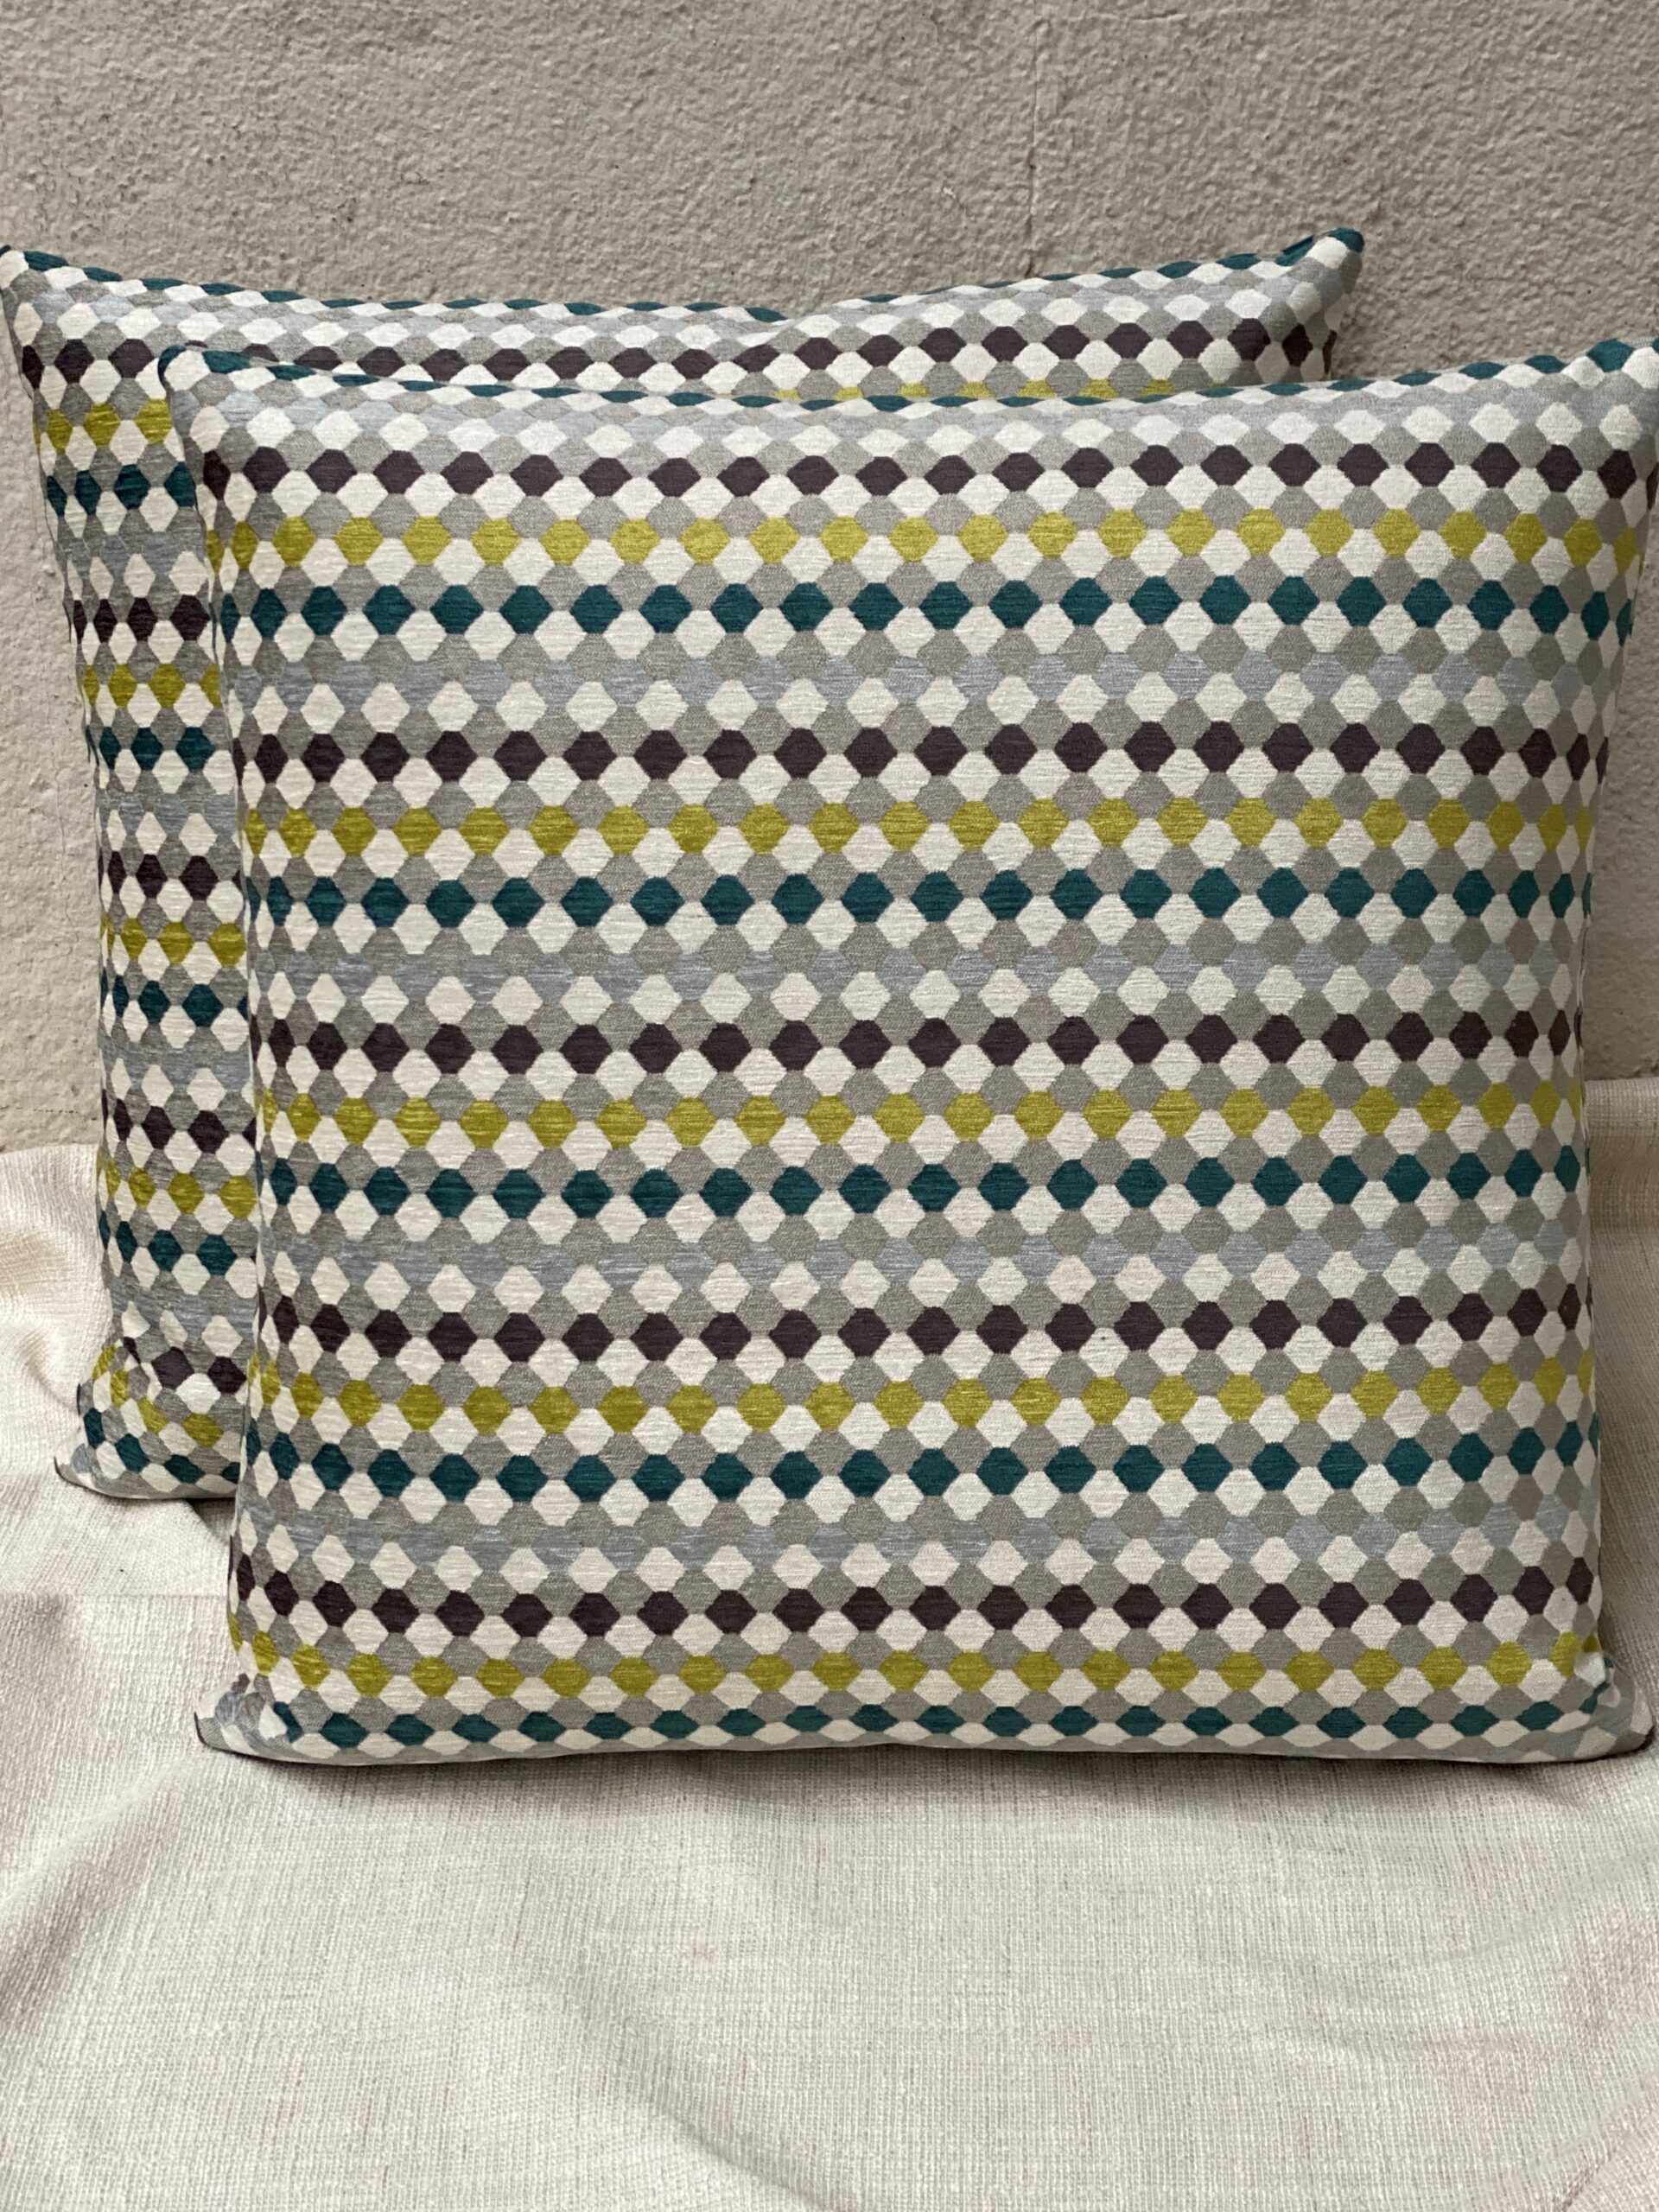 Susan Strauss Design x ROMO Pillows